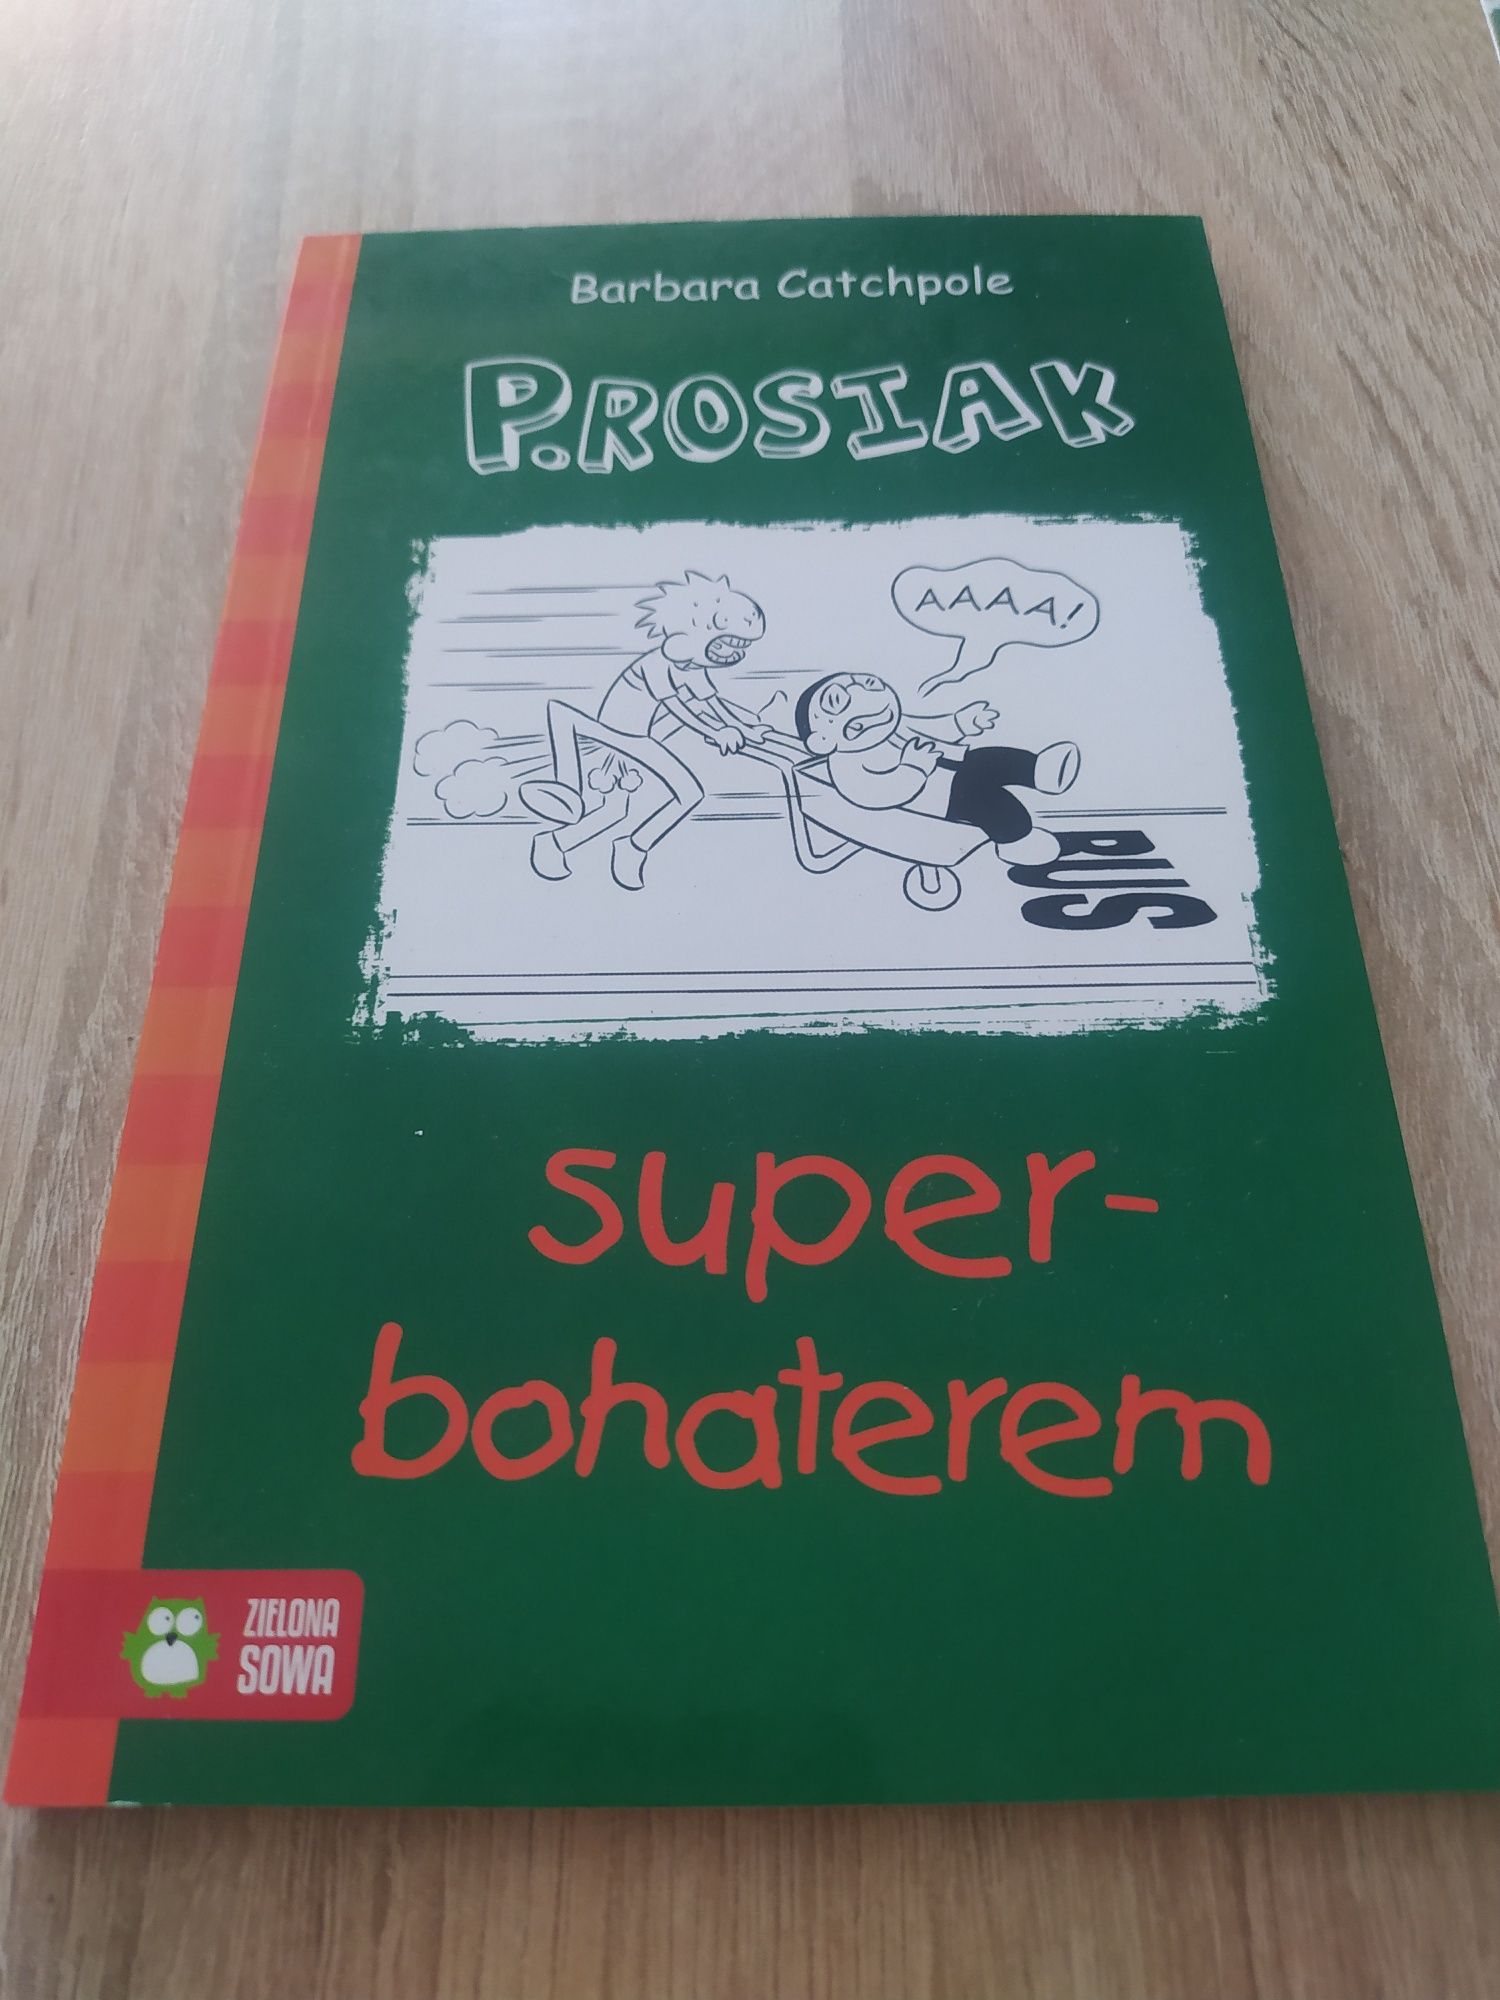 P.Rosiak super-bohaterem